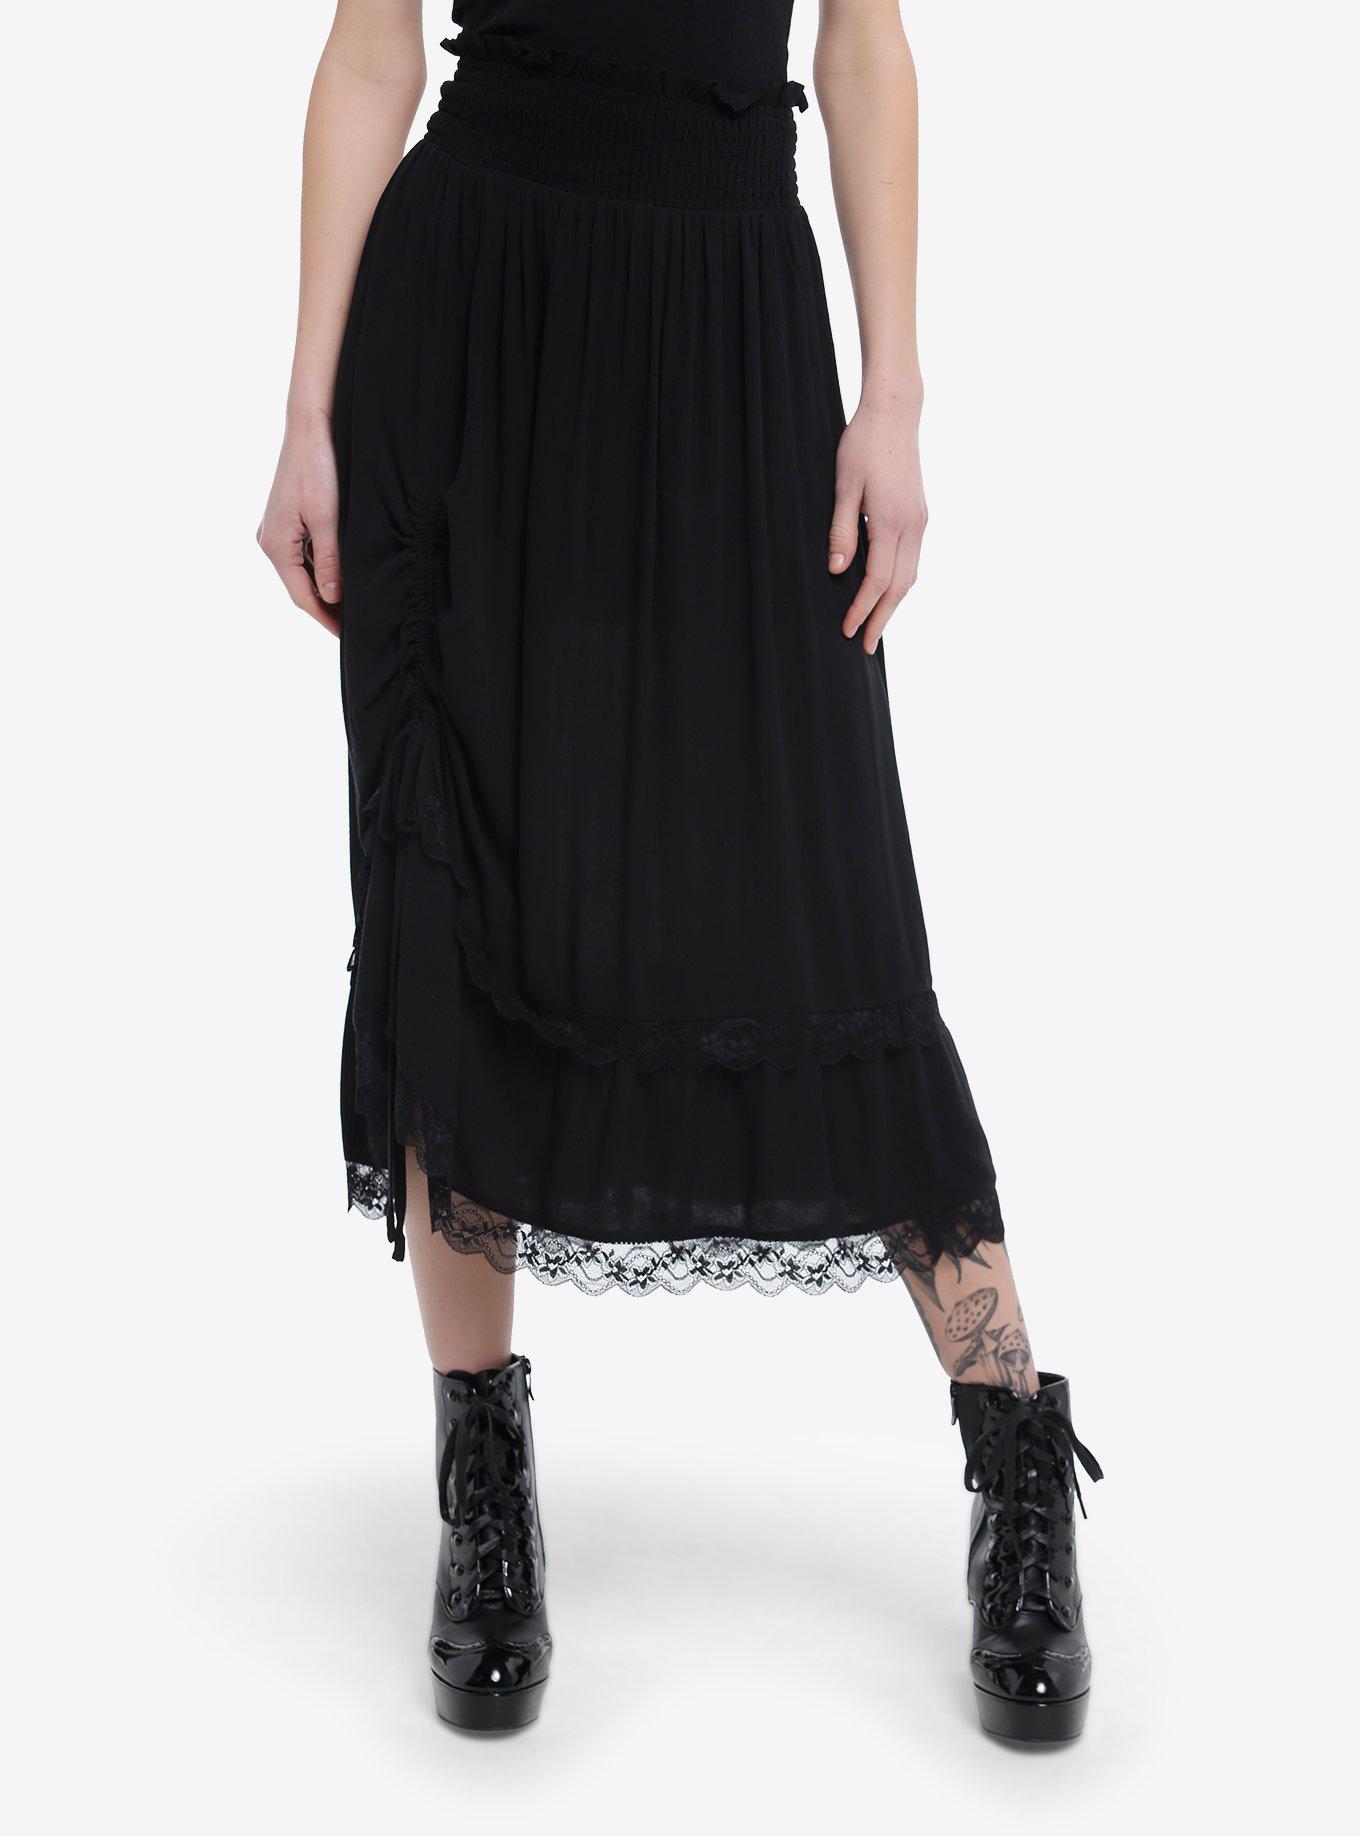 MRULIC dresses for women 2022 Womens 2 Piece Outfits Set Cami Crop Tops  Cute Ruffle Shorts Tracksuit Clubwear Women's Skirt Suit Black + L